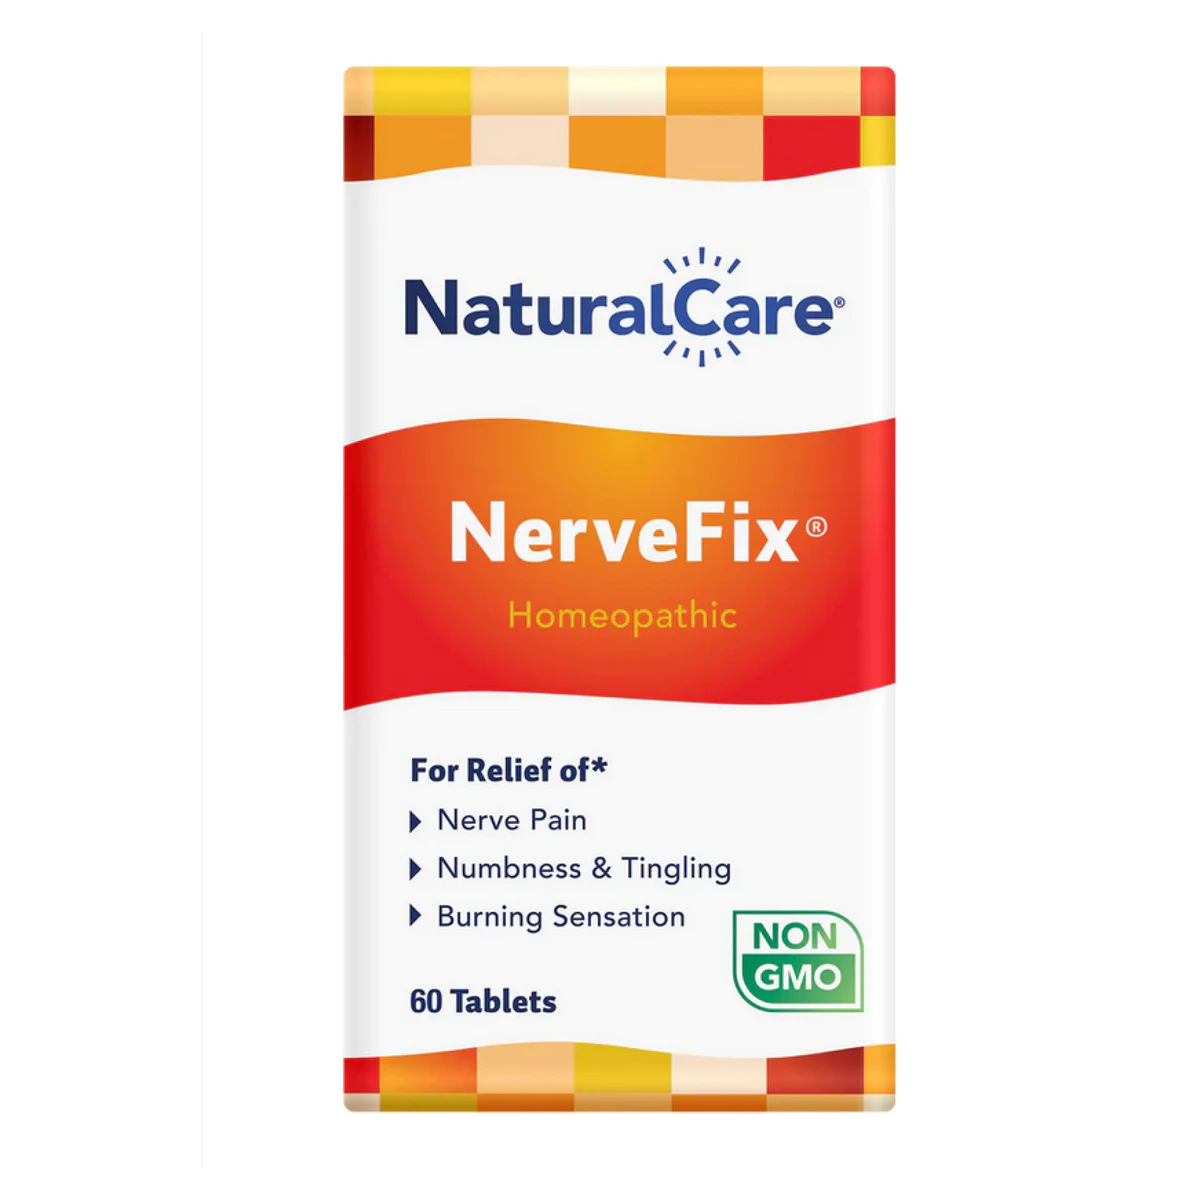 NaturalCare Nervefix - Natural Care